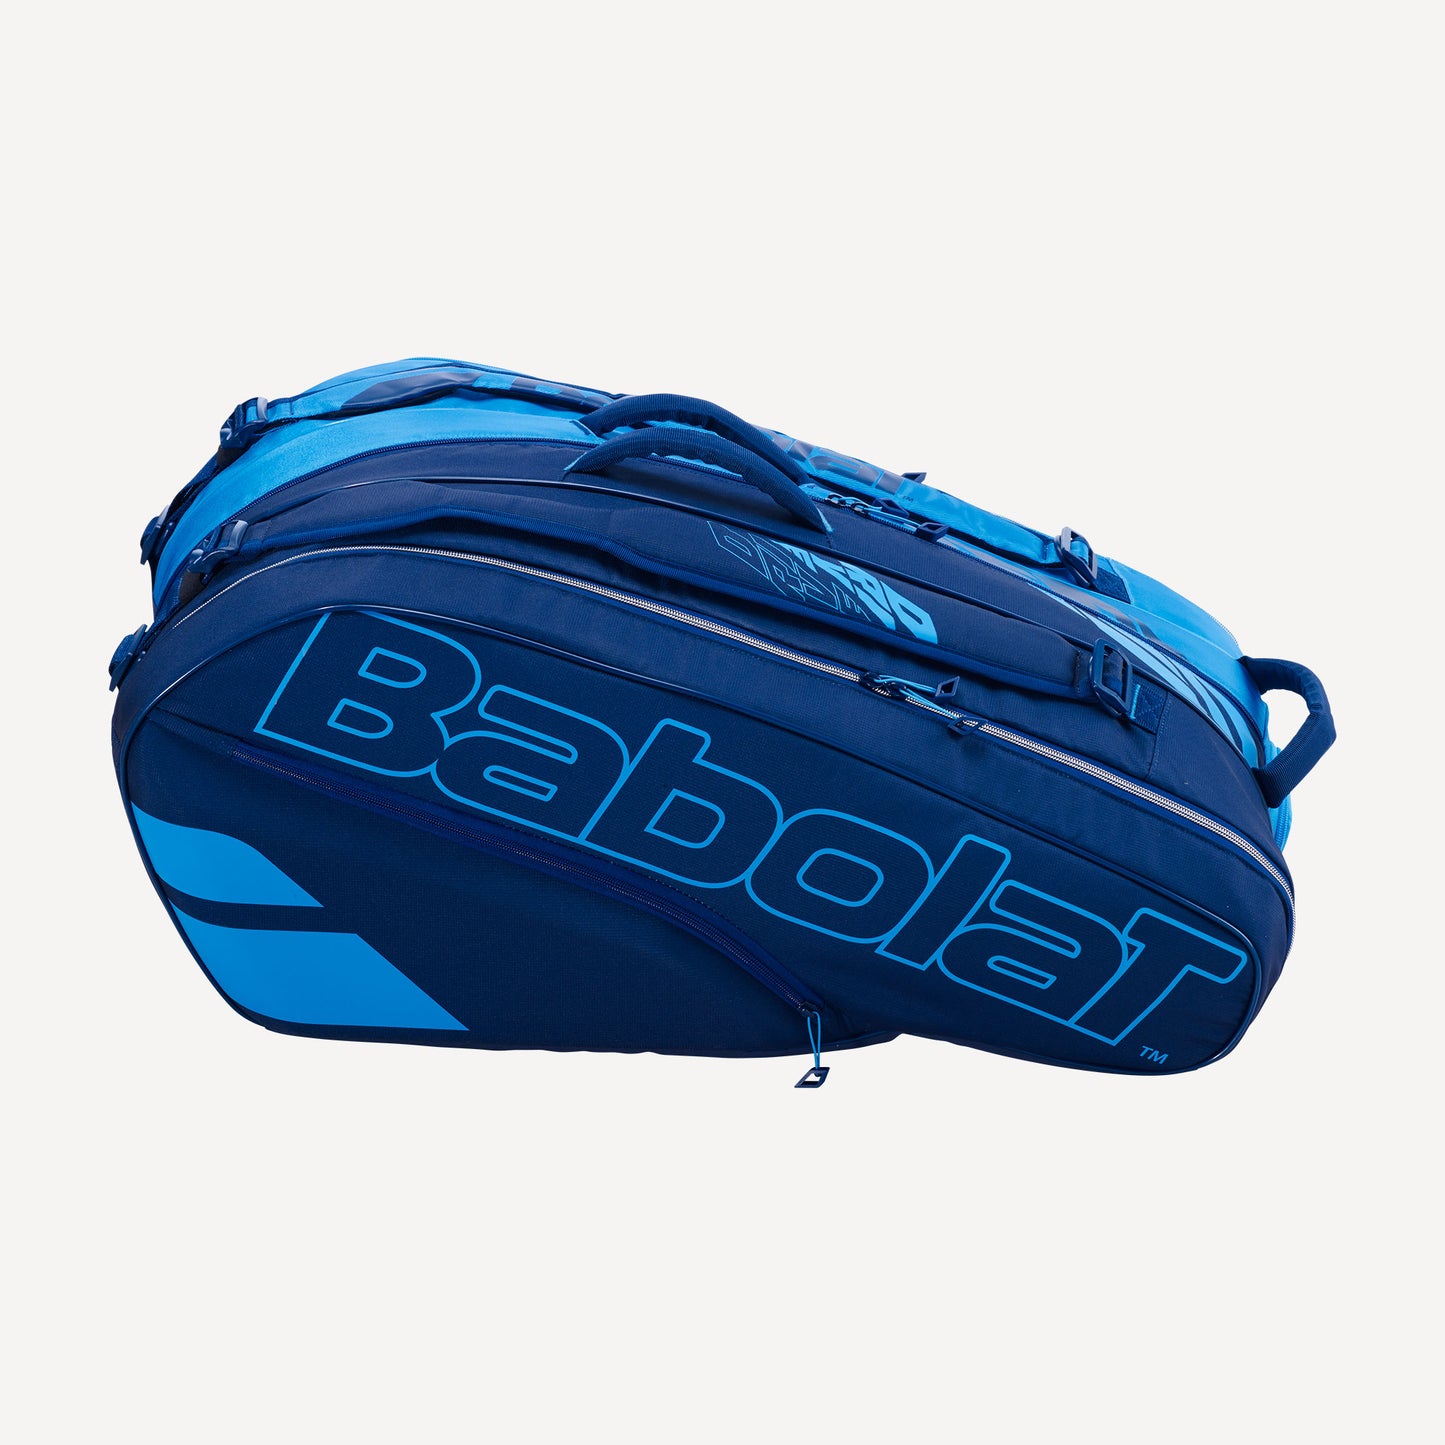 Babolat Pure Drive RH X12 Tennis Bag Blue (3)